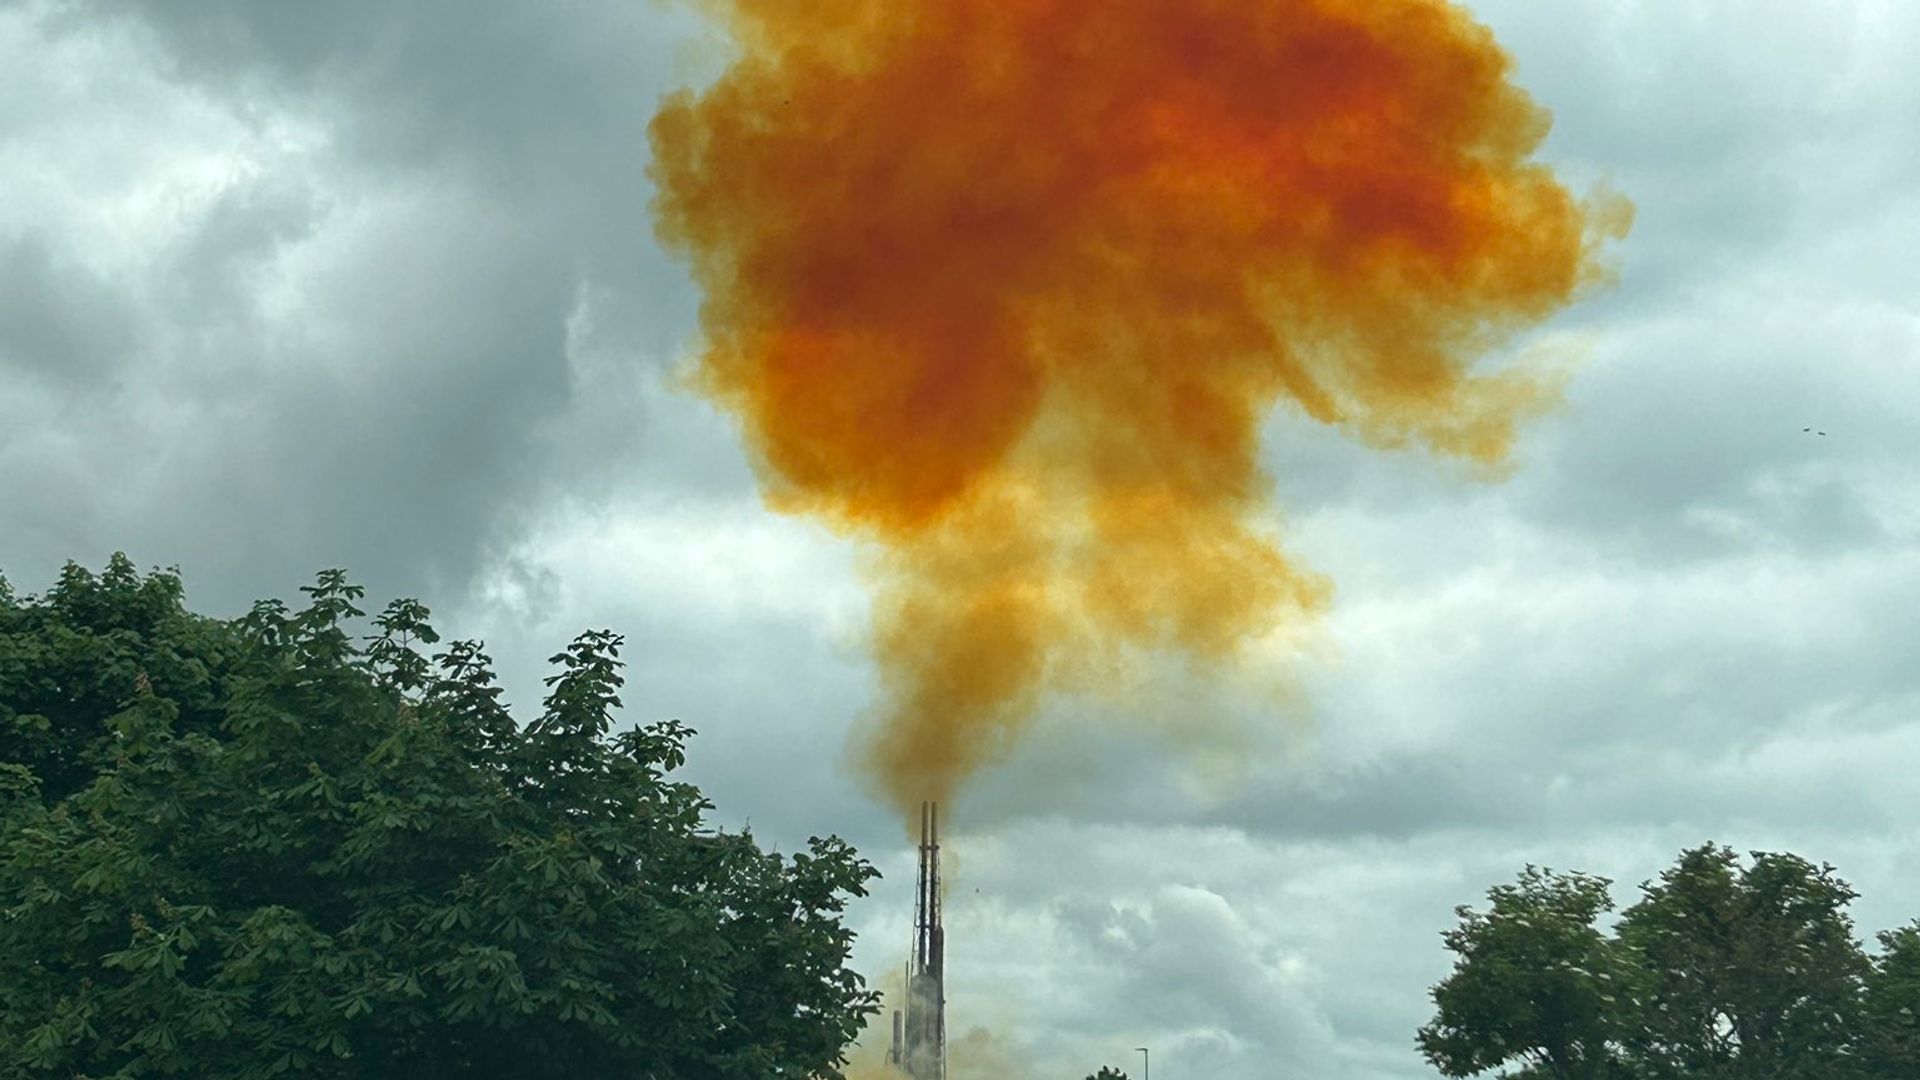 Orange cloud appears in skies after 'industrial incident'